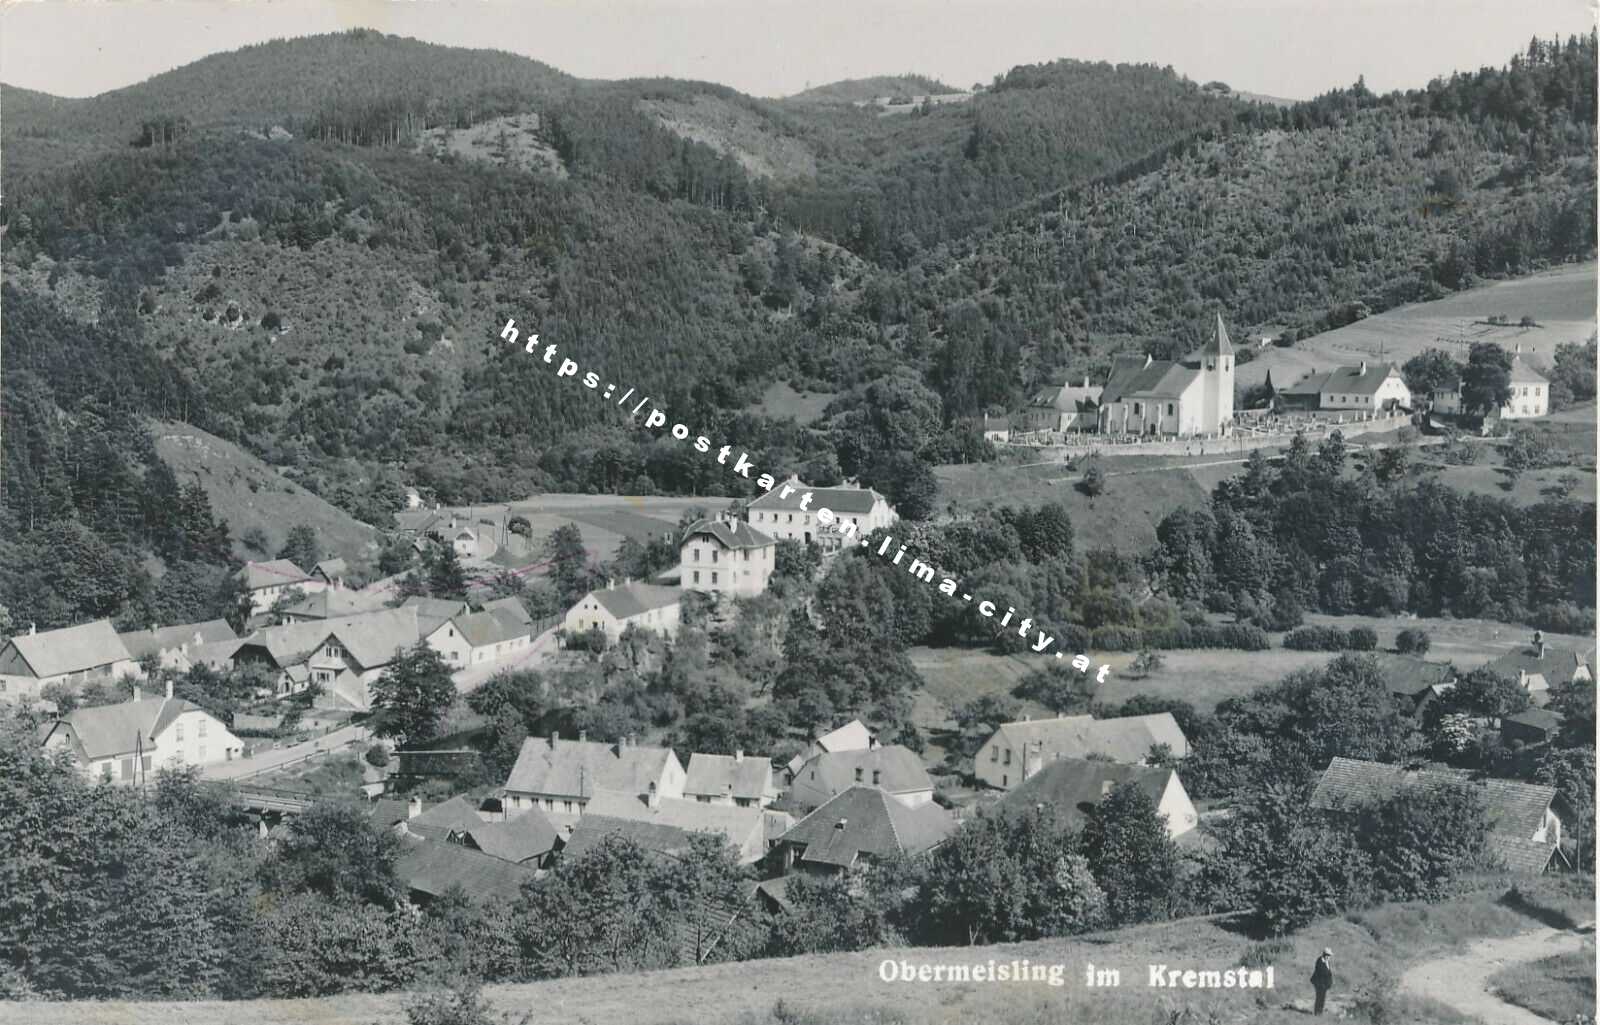 Obermeisling 1966